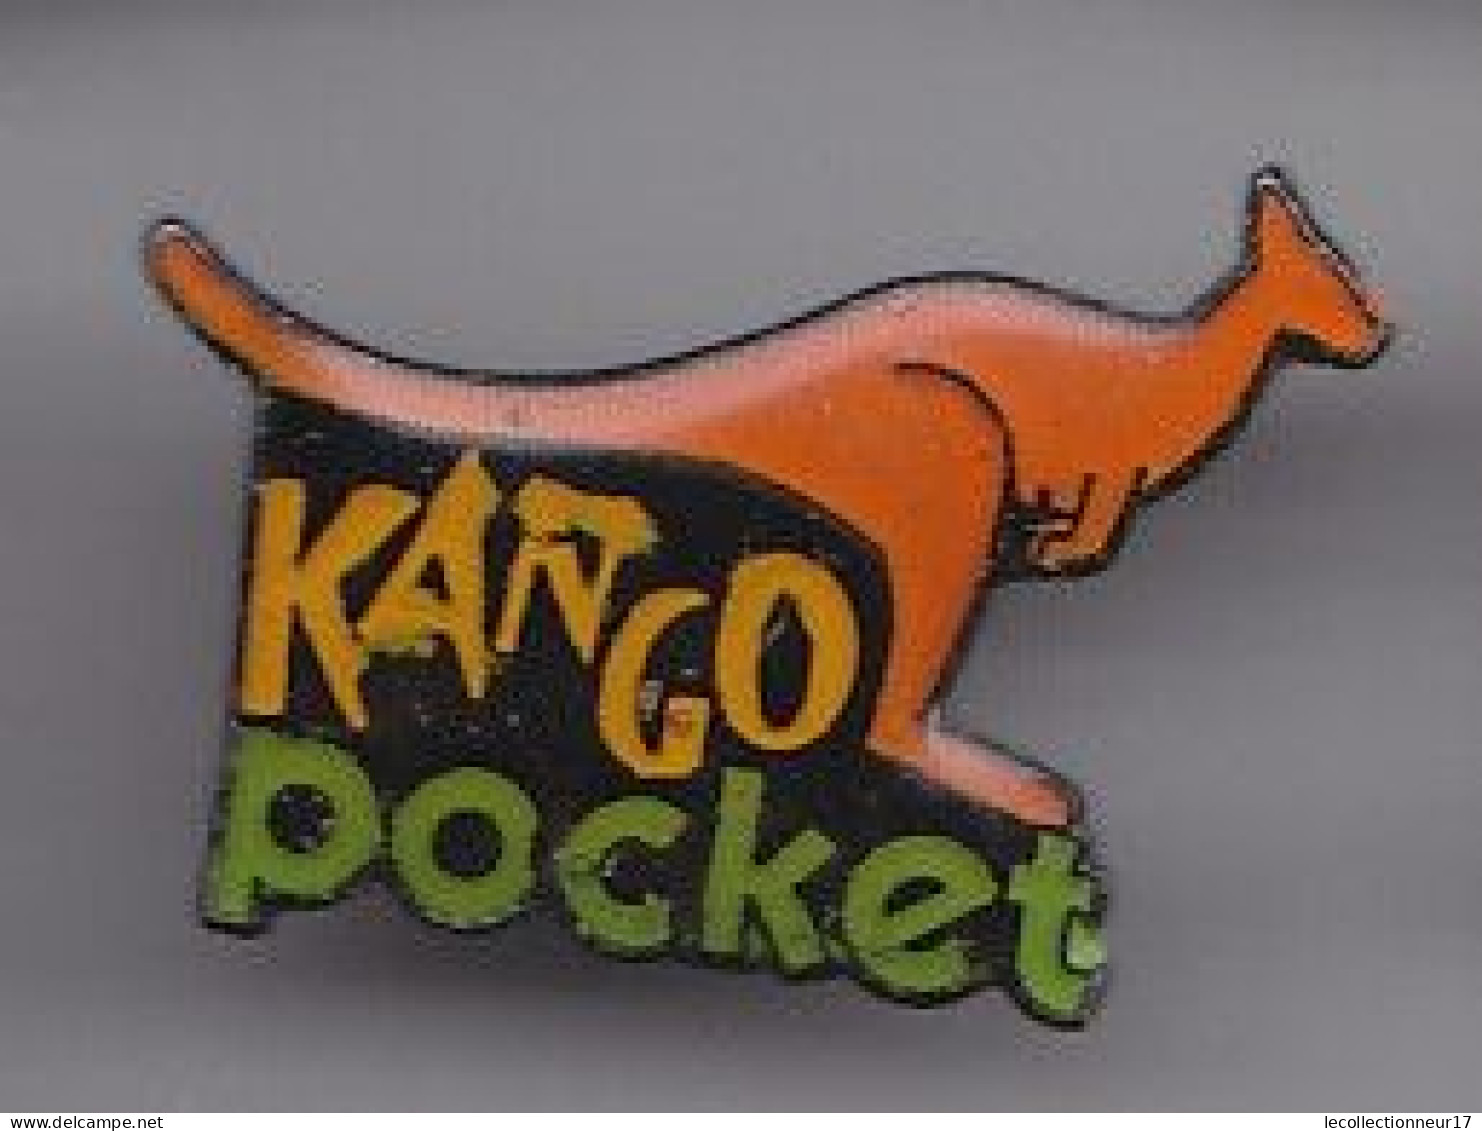 Pin's Kango Pocker Kangourou Réf 2599 - Dieren